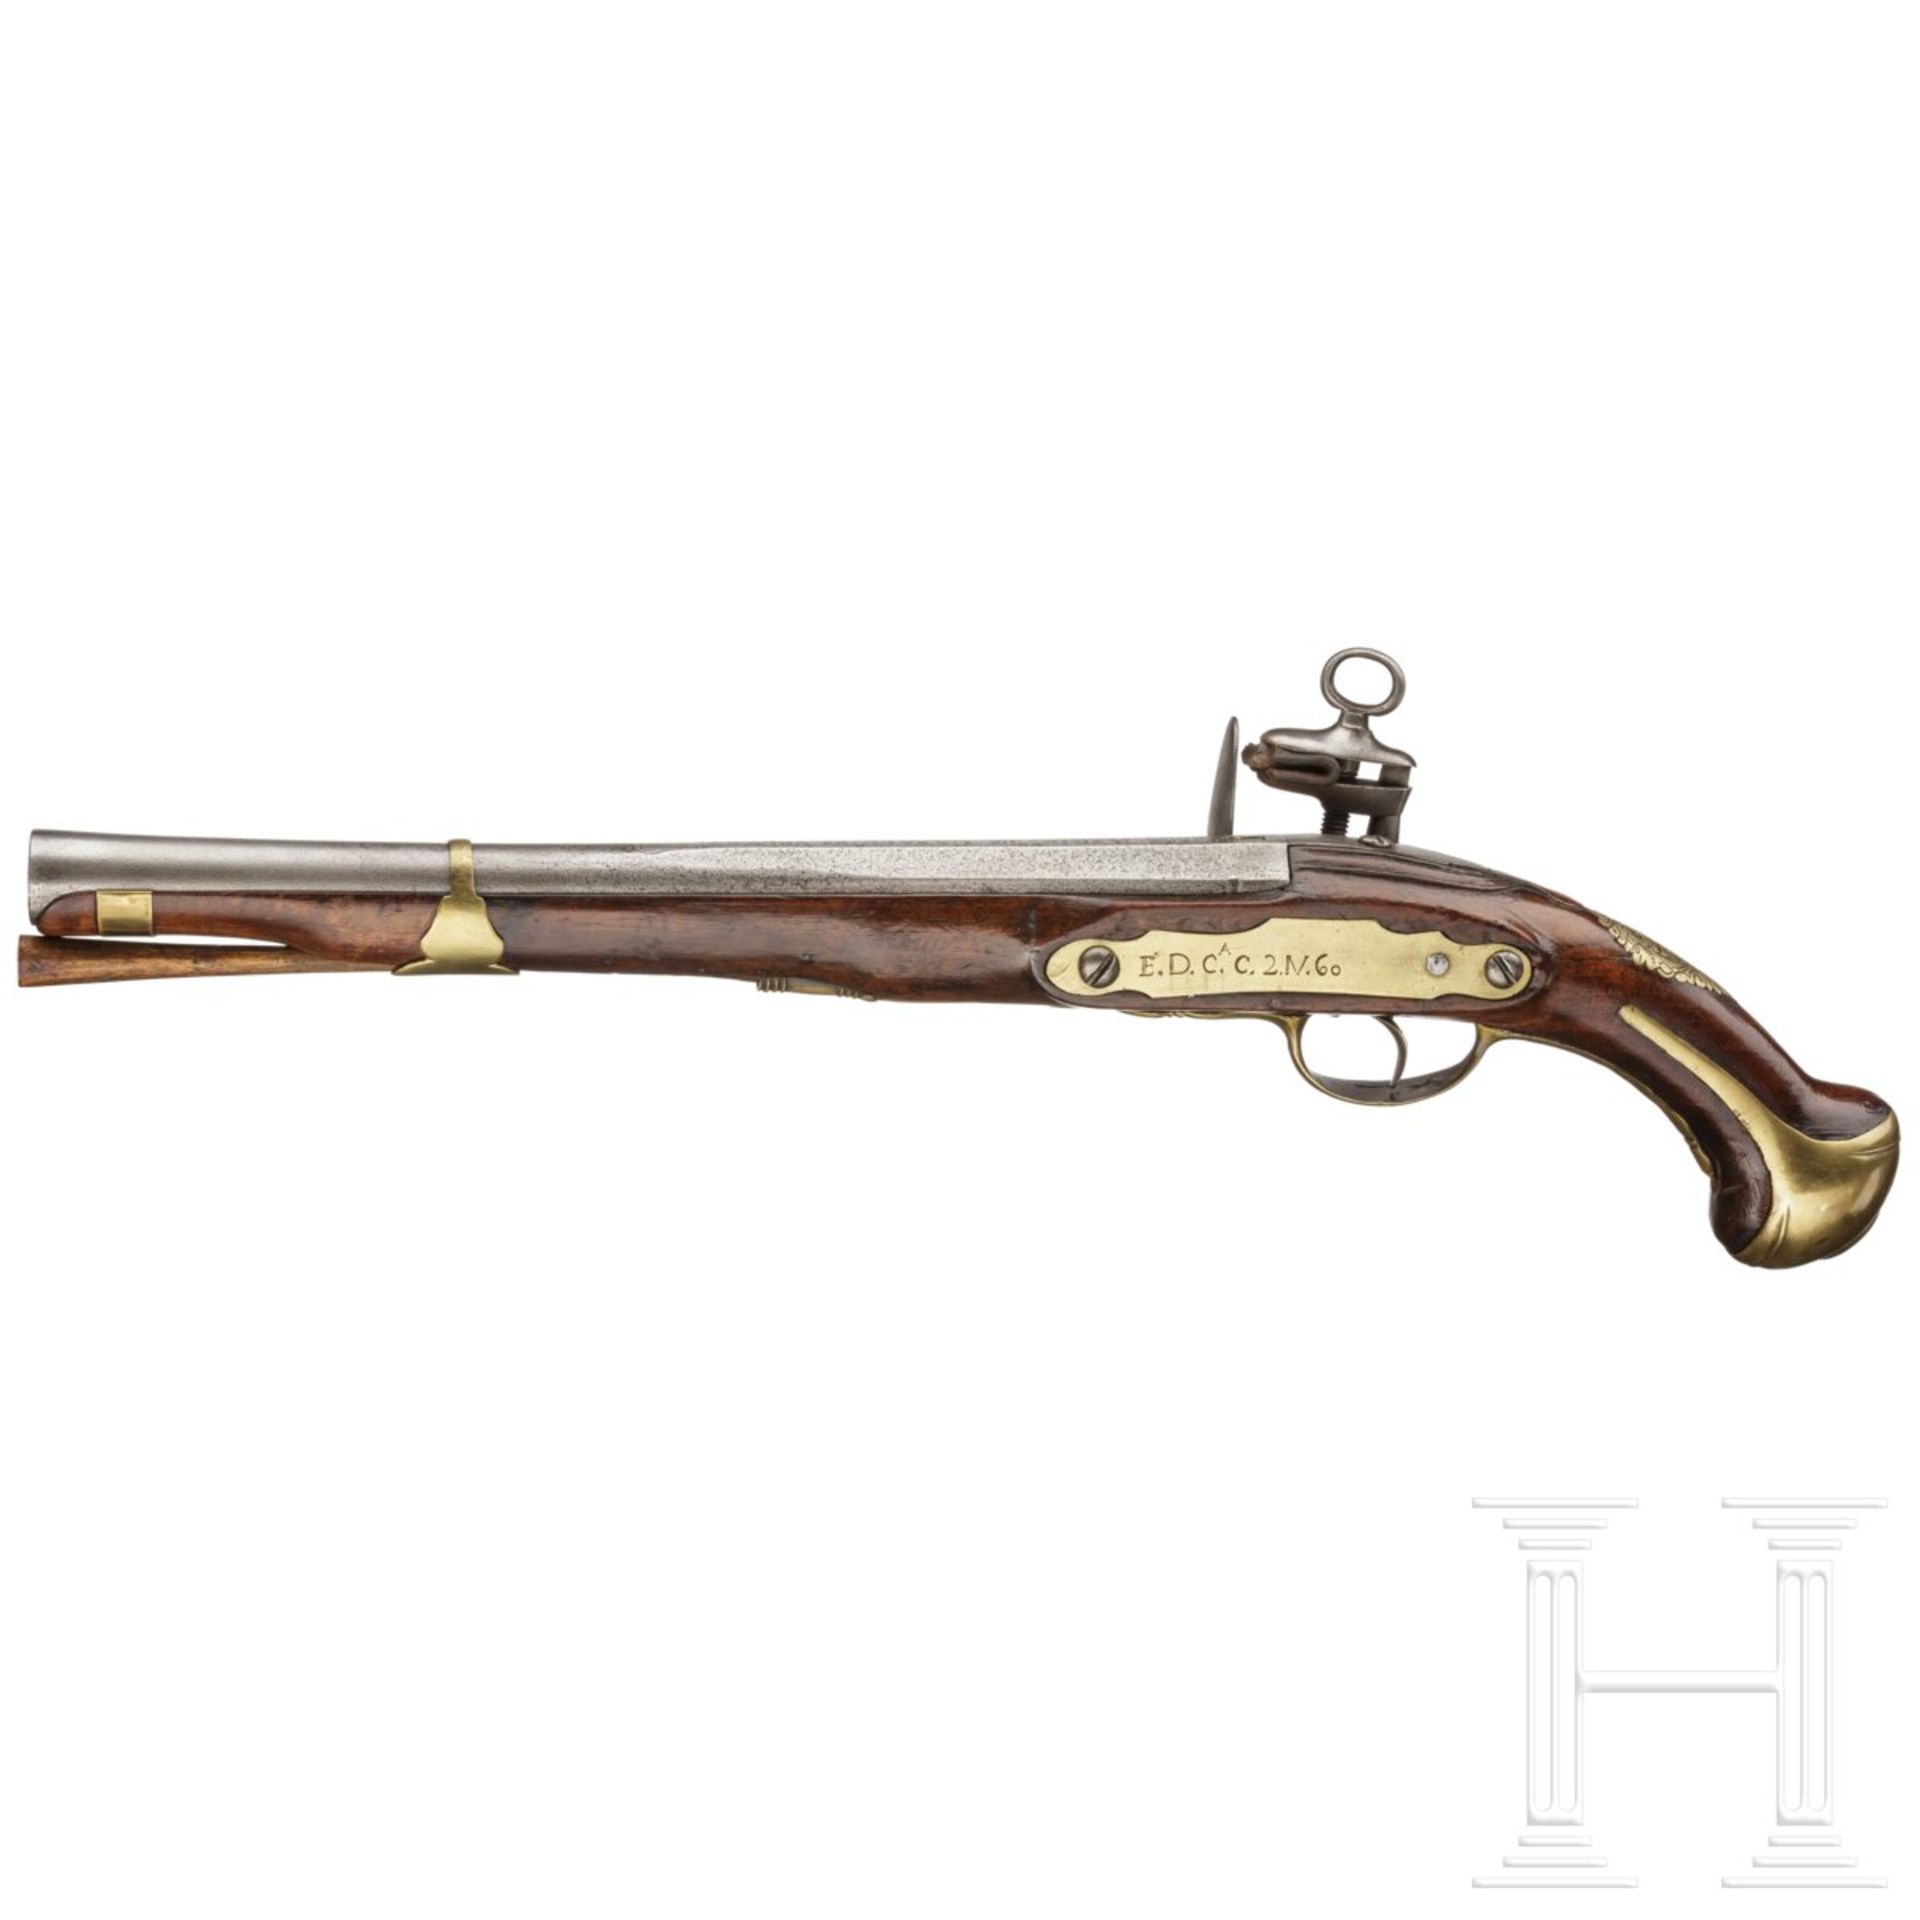 Kavallerie-Steinschlosspistole Mod. 1789, Fertigung 1793 - Bild 2 aus 3